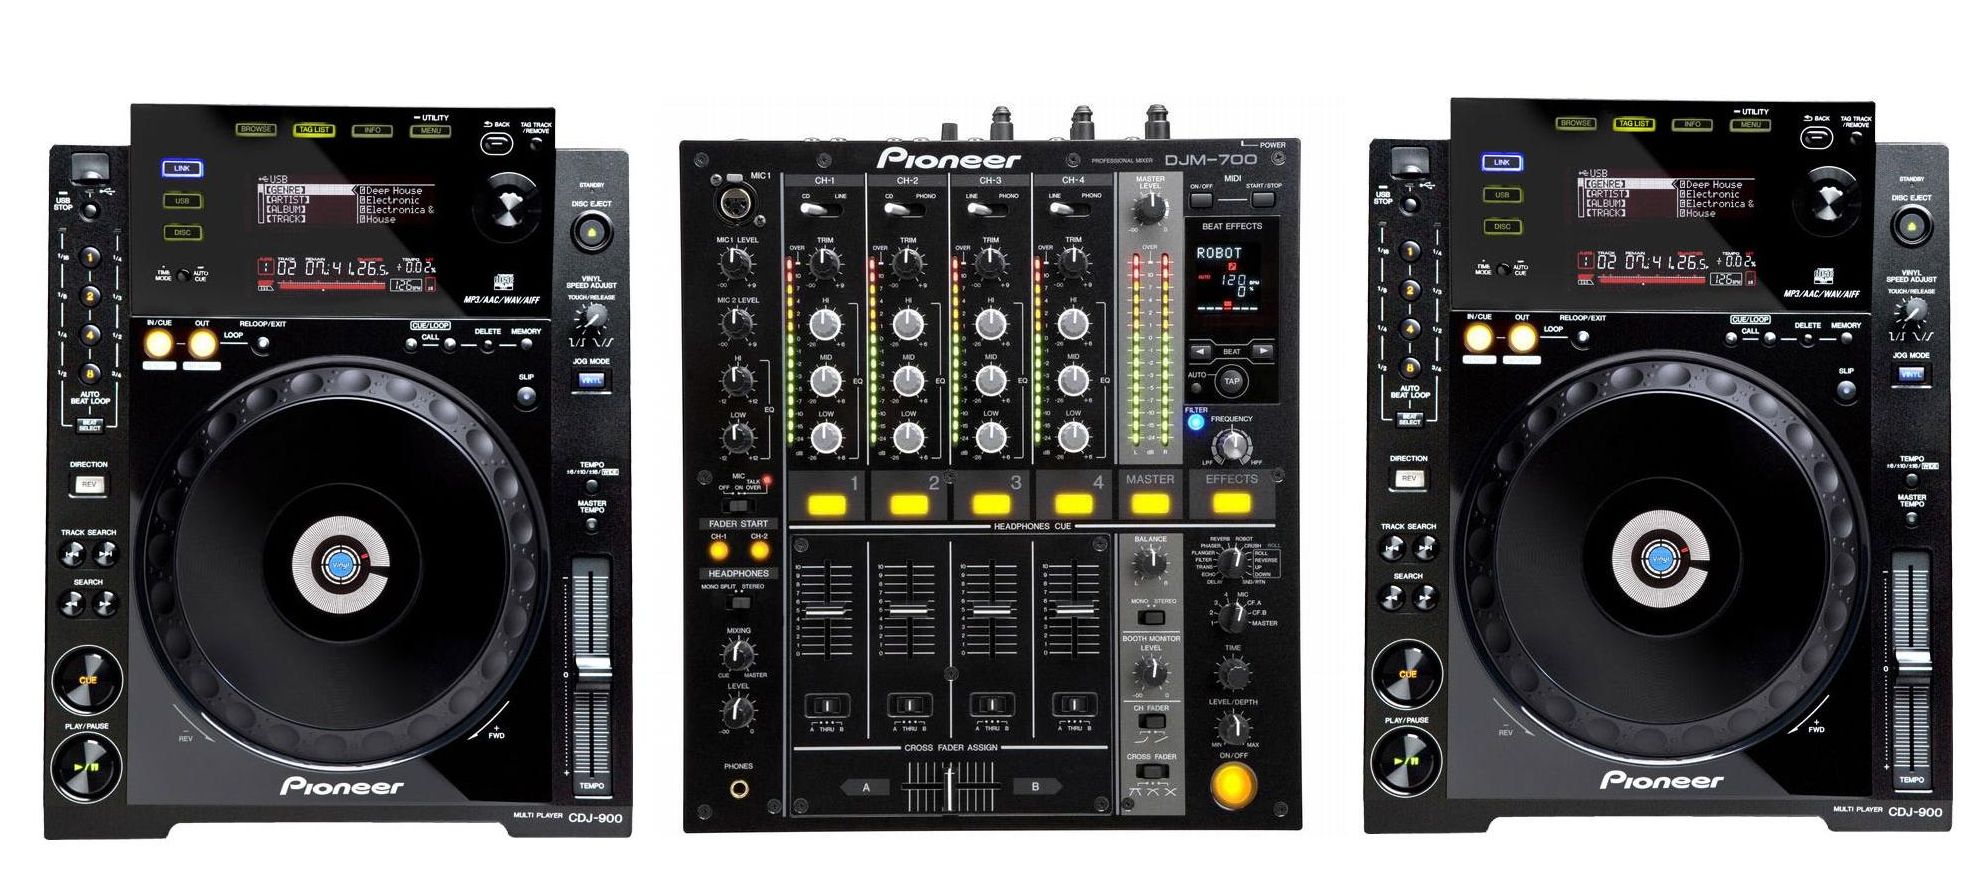 CDJ- 900 player DJM-700 mixer.. large image 0